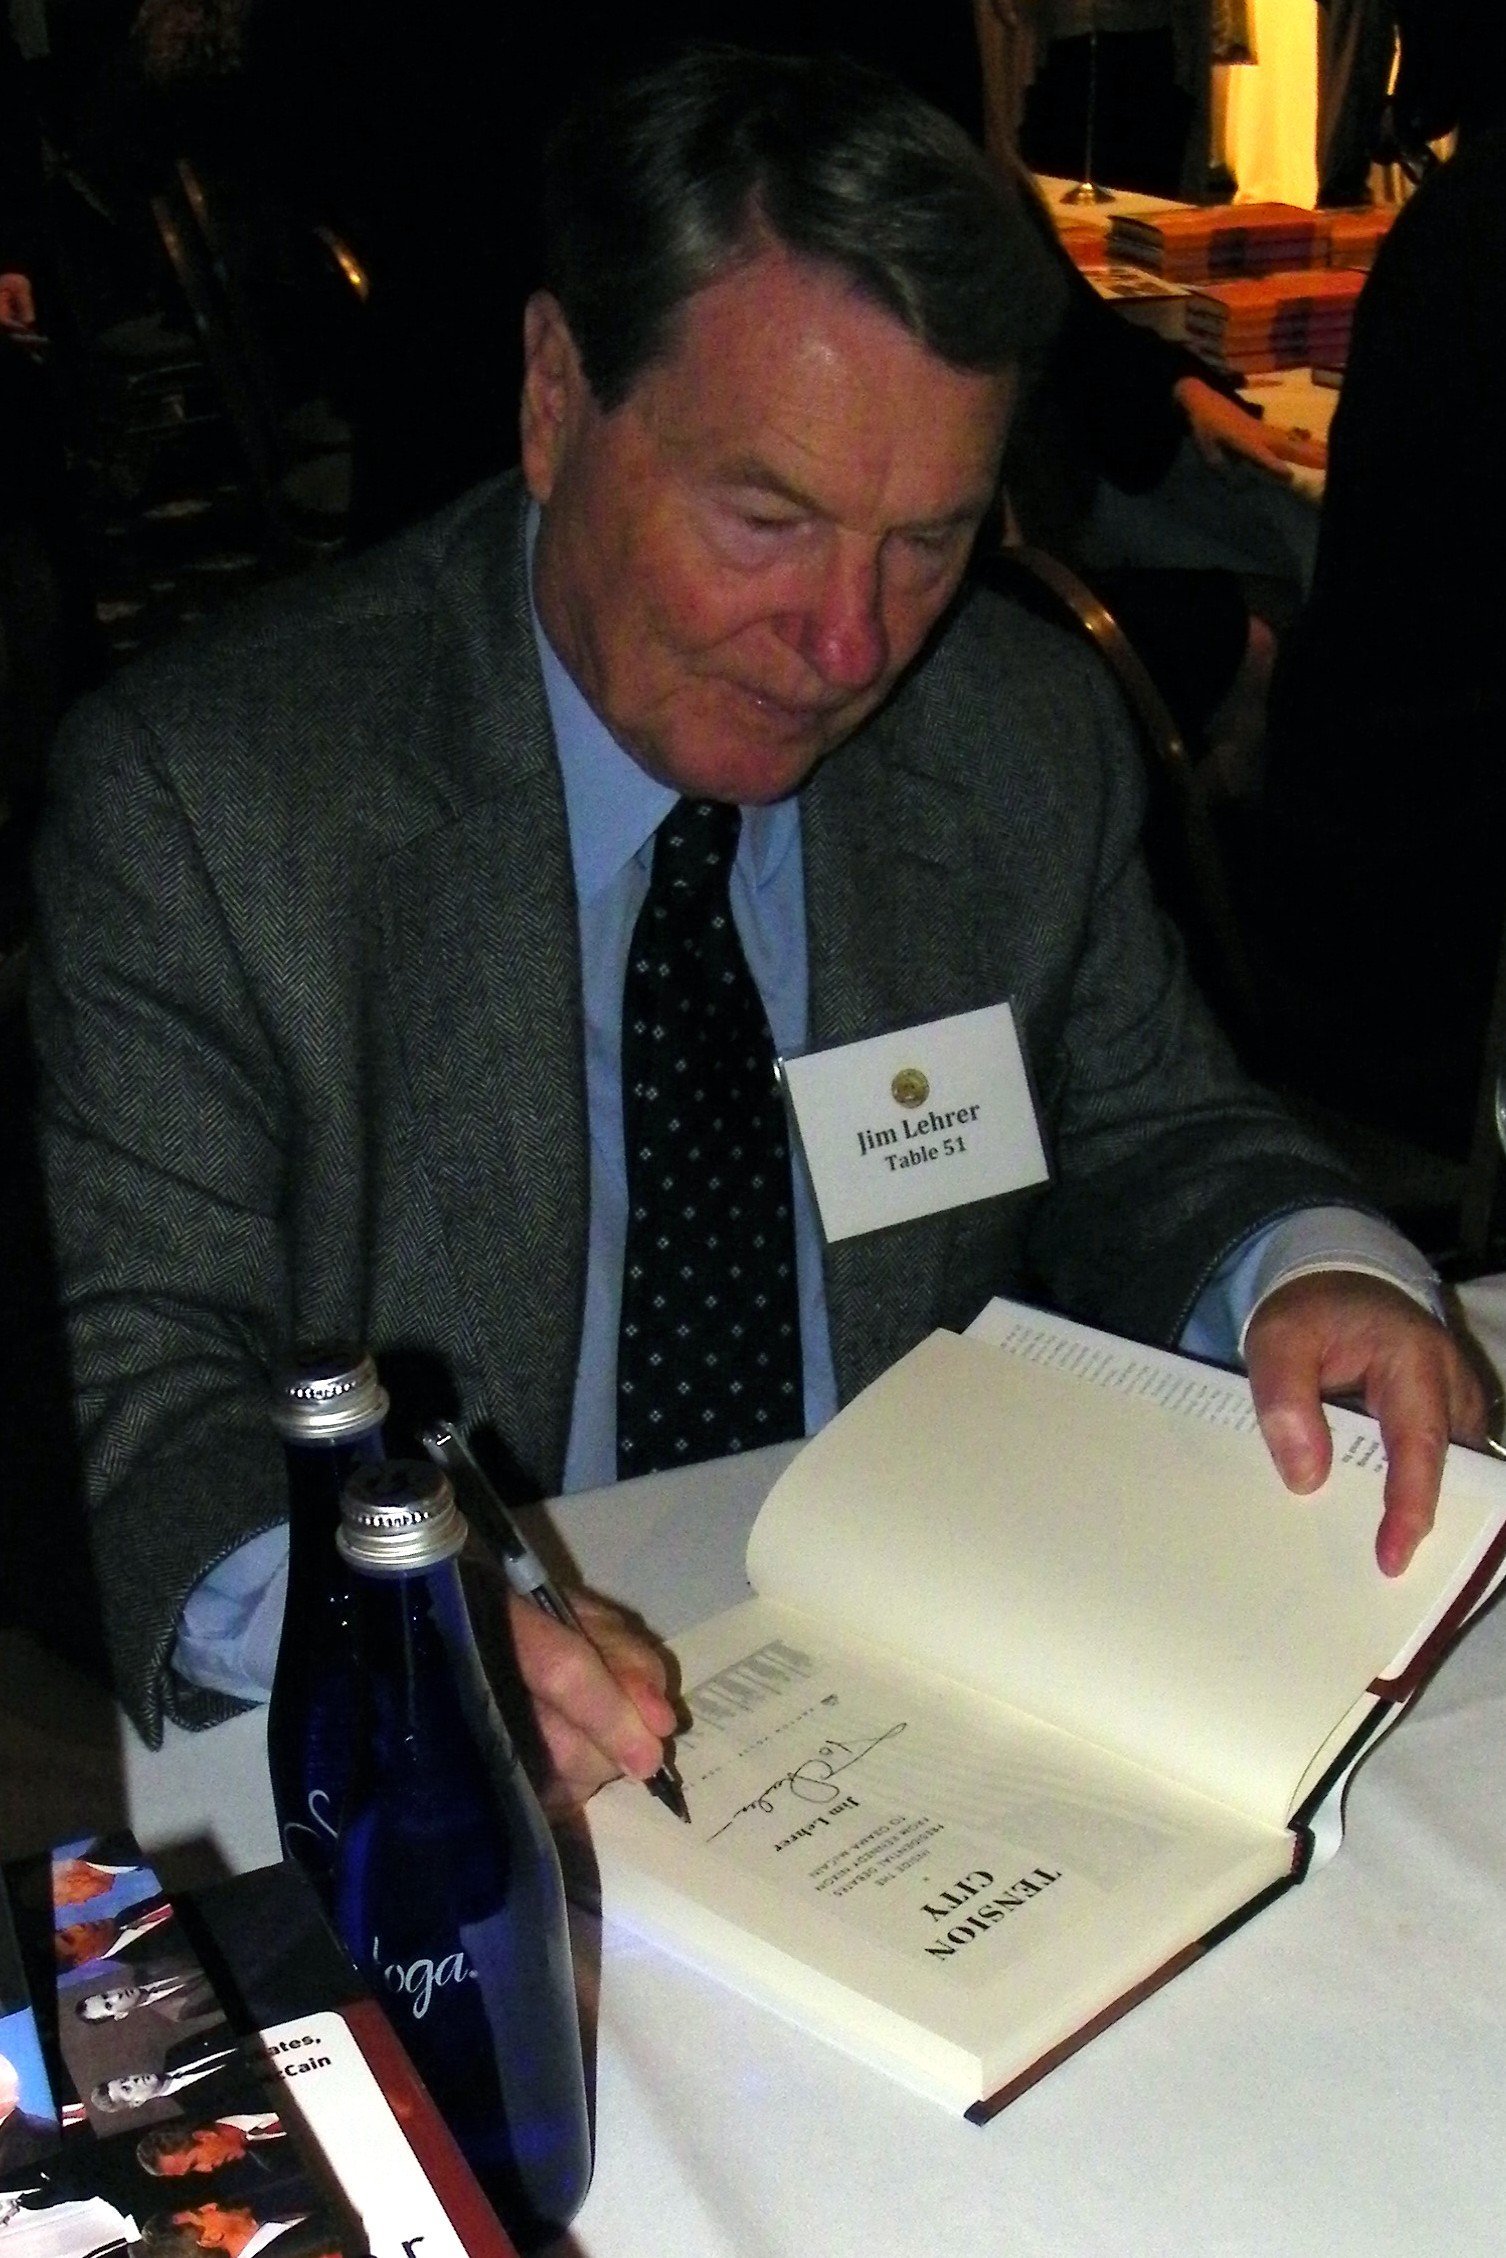 Jim Lehrer signing copies of his book at the National Press Club Book Fair in 2011 | Photo: Alan Kotok/Wikipedia